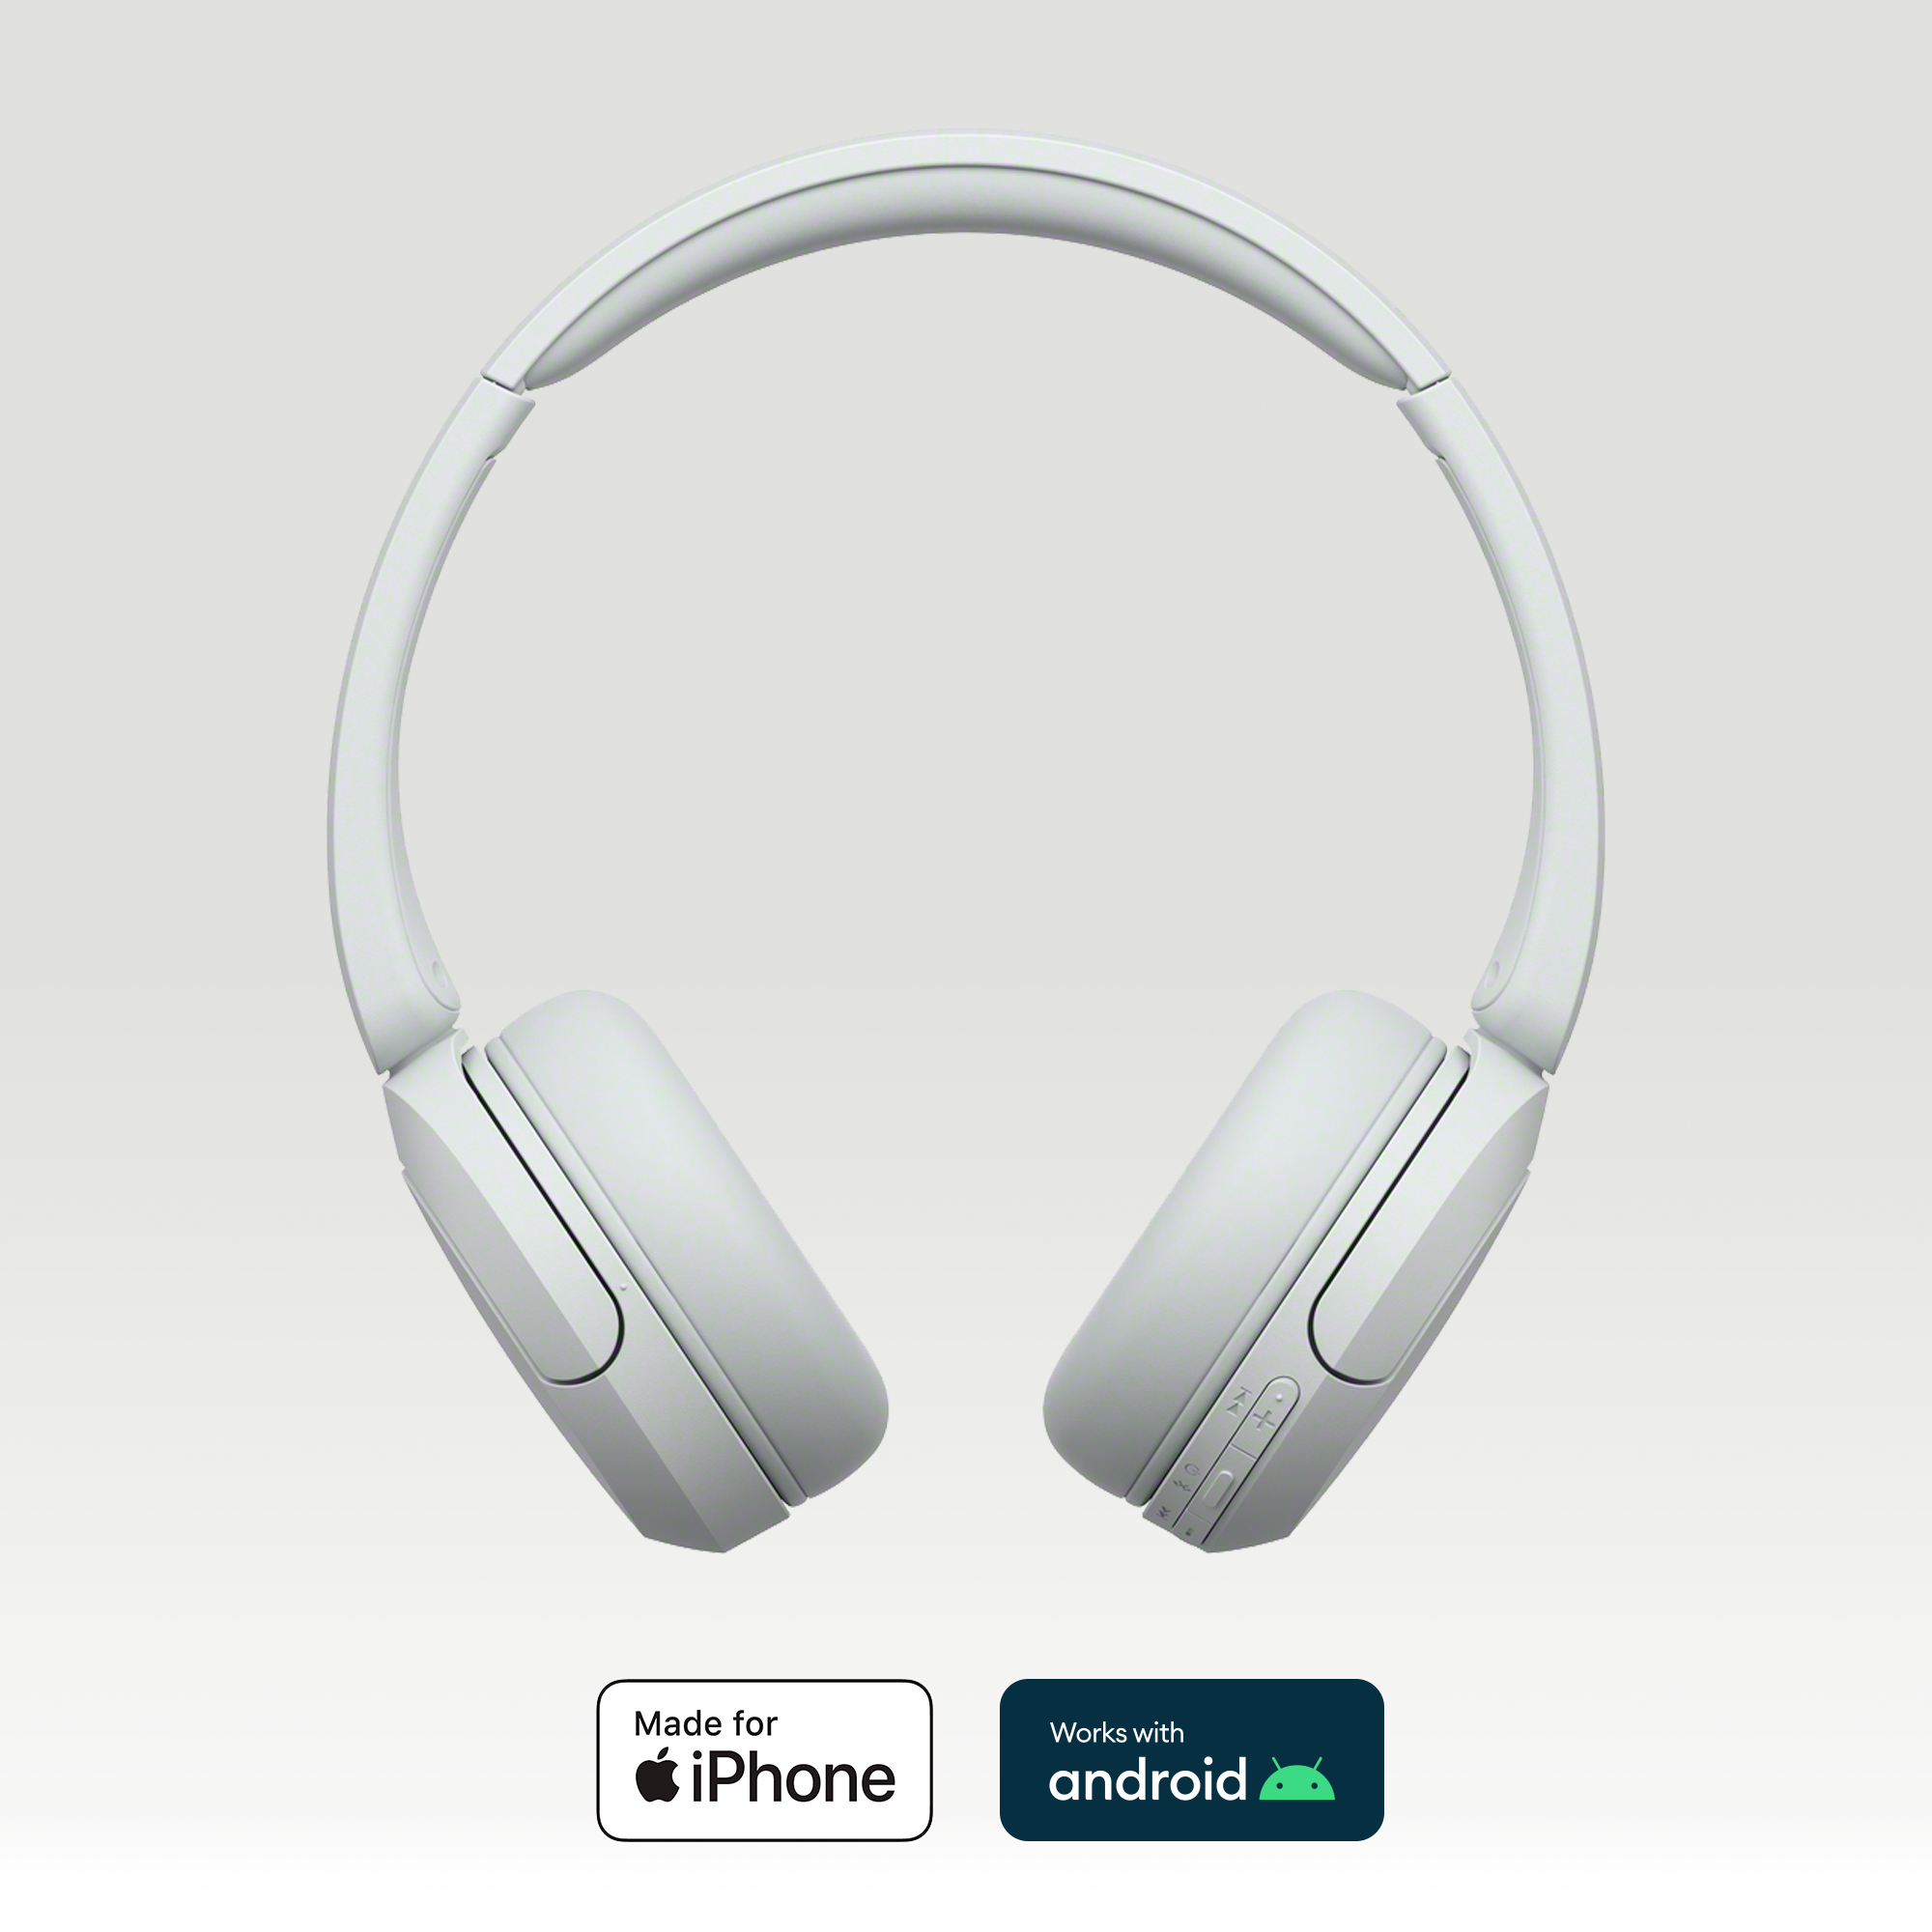 SONY White Kopfhörer Bluetooth WH-CH520, On-ear